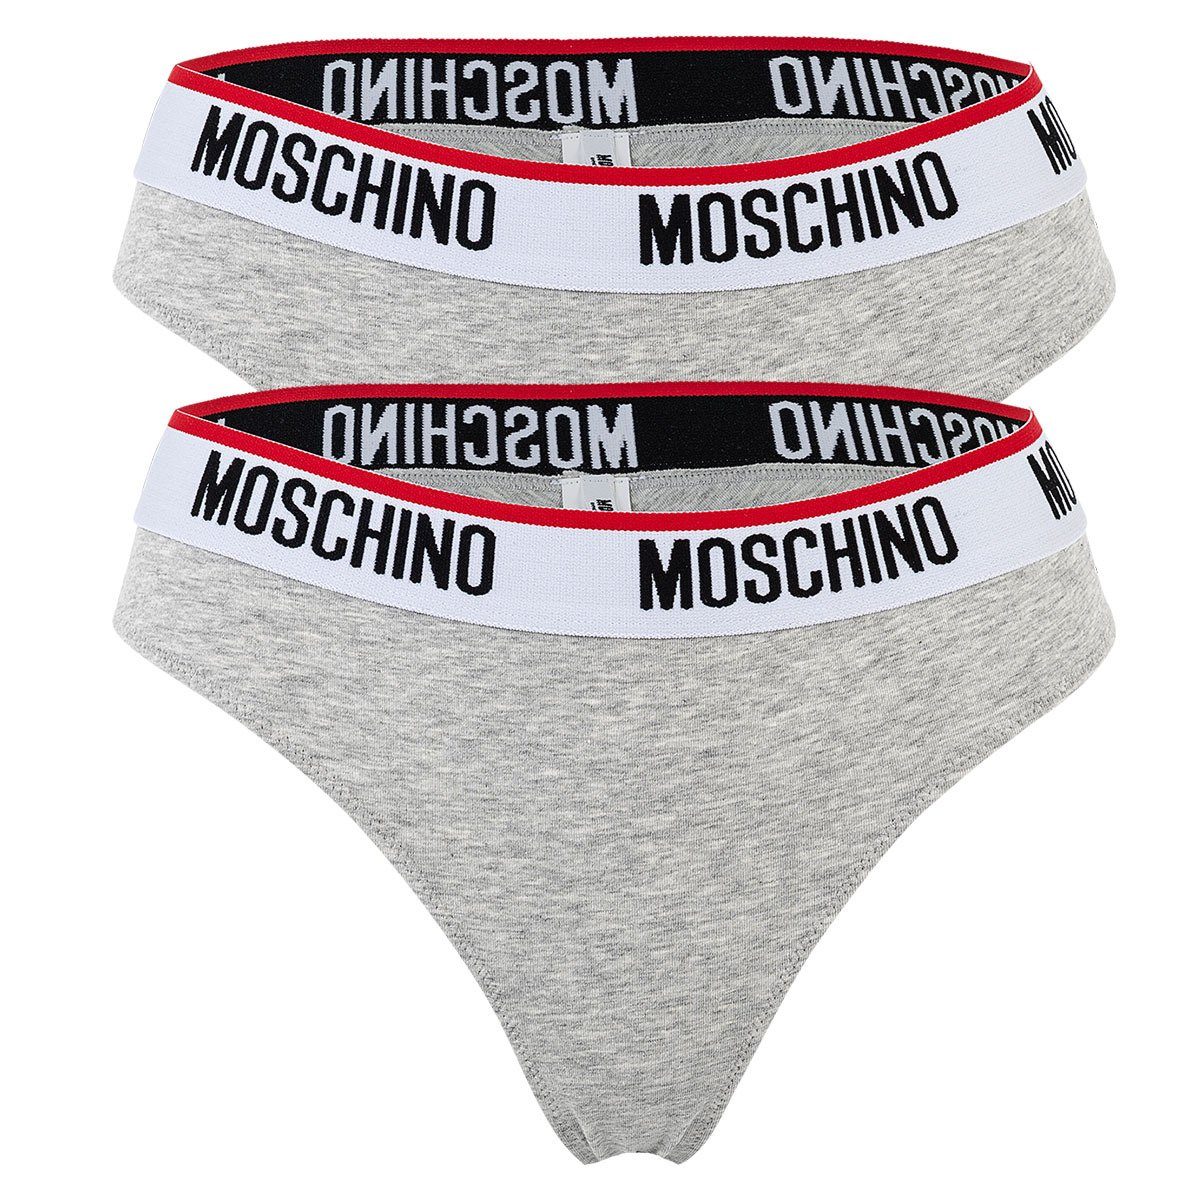 Moschino Slip Damen Brazilian Slips 2er Pack - Unterhose Grau